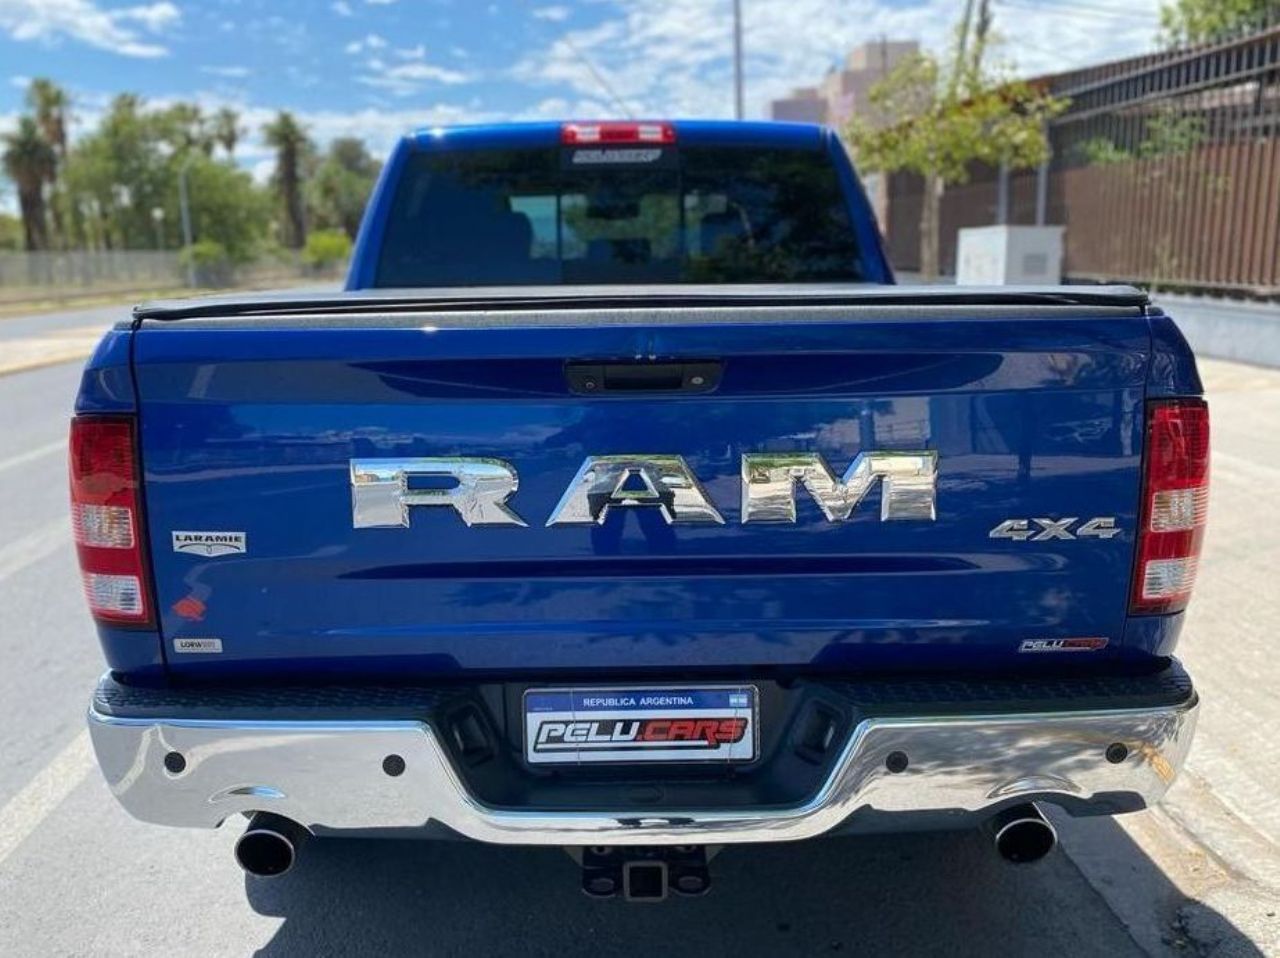 RAM 1500 Usada en San Juan, deRuedas